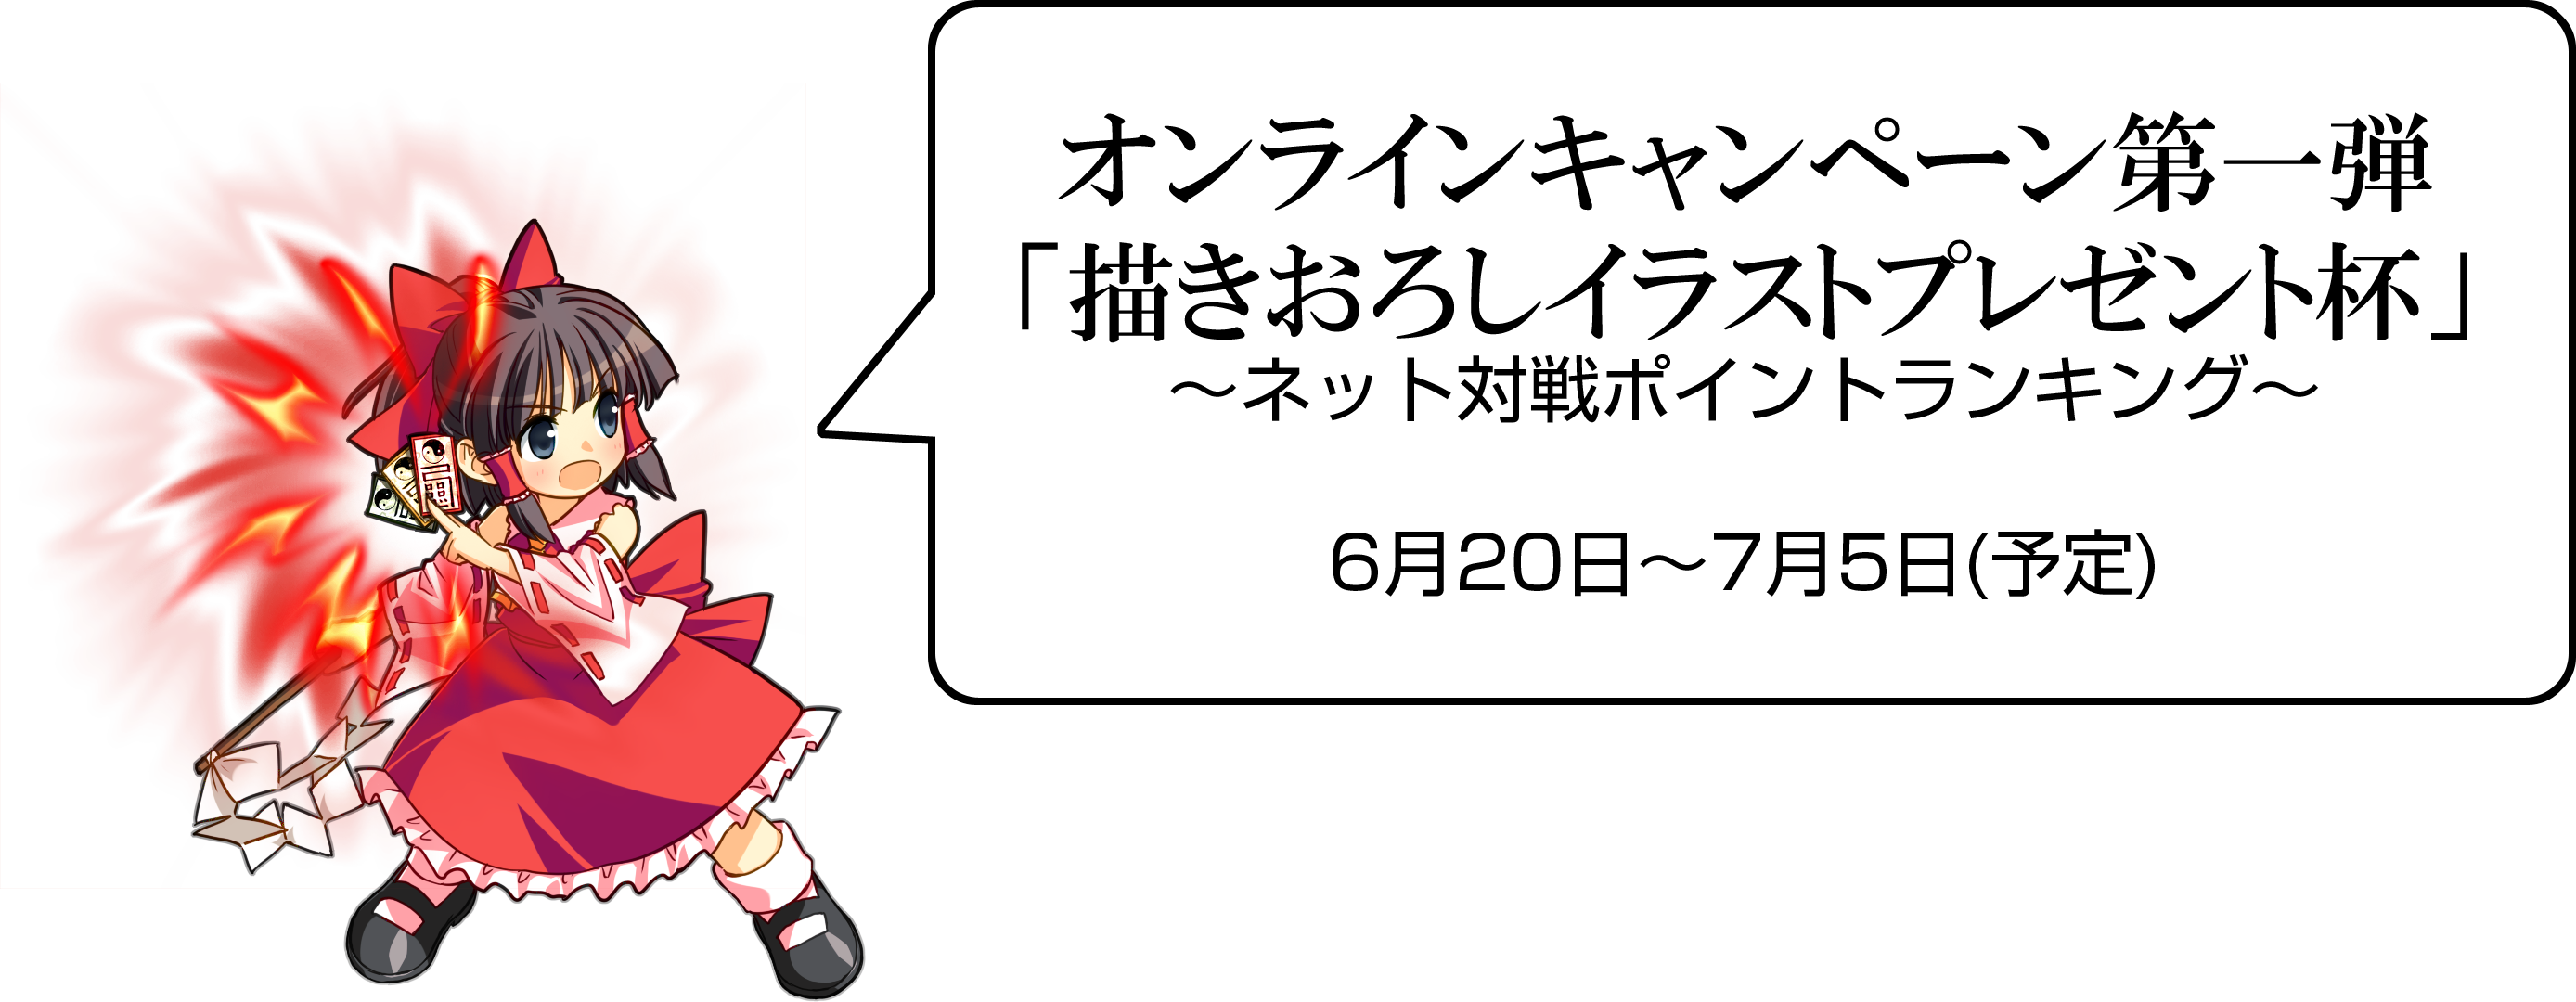 Cubetype 幻想の輪舞 Ps4 版が2015年6月11日発売決定 オンラインキャンペーン第一弾 開催決定